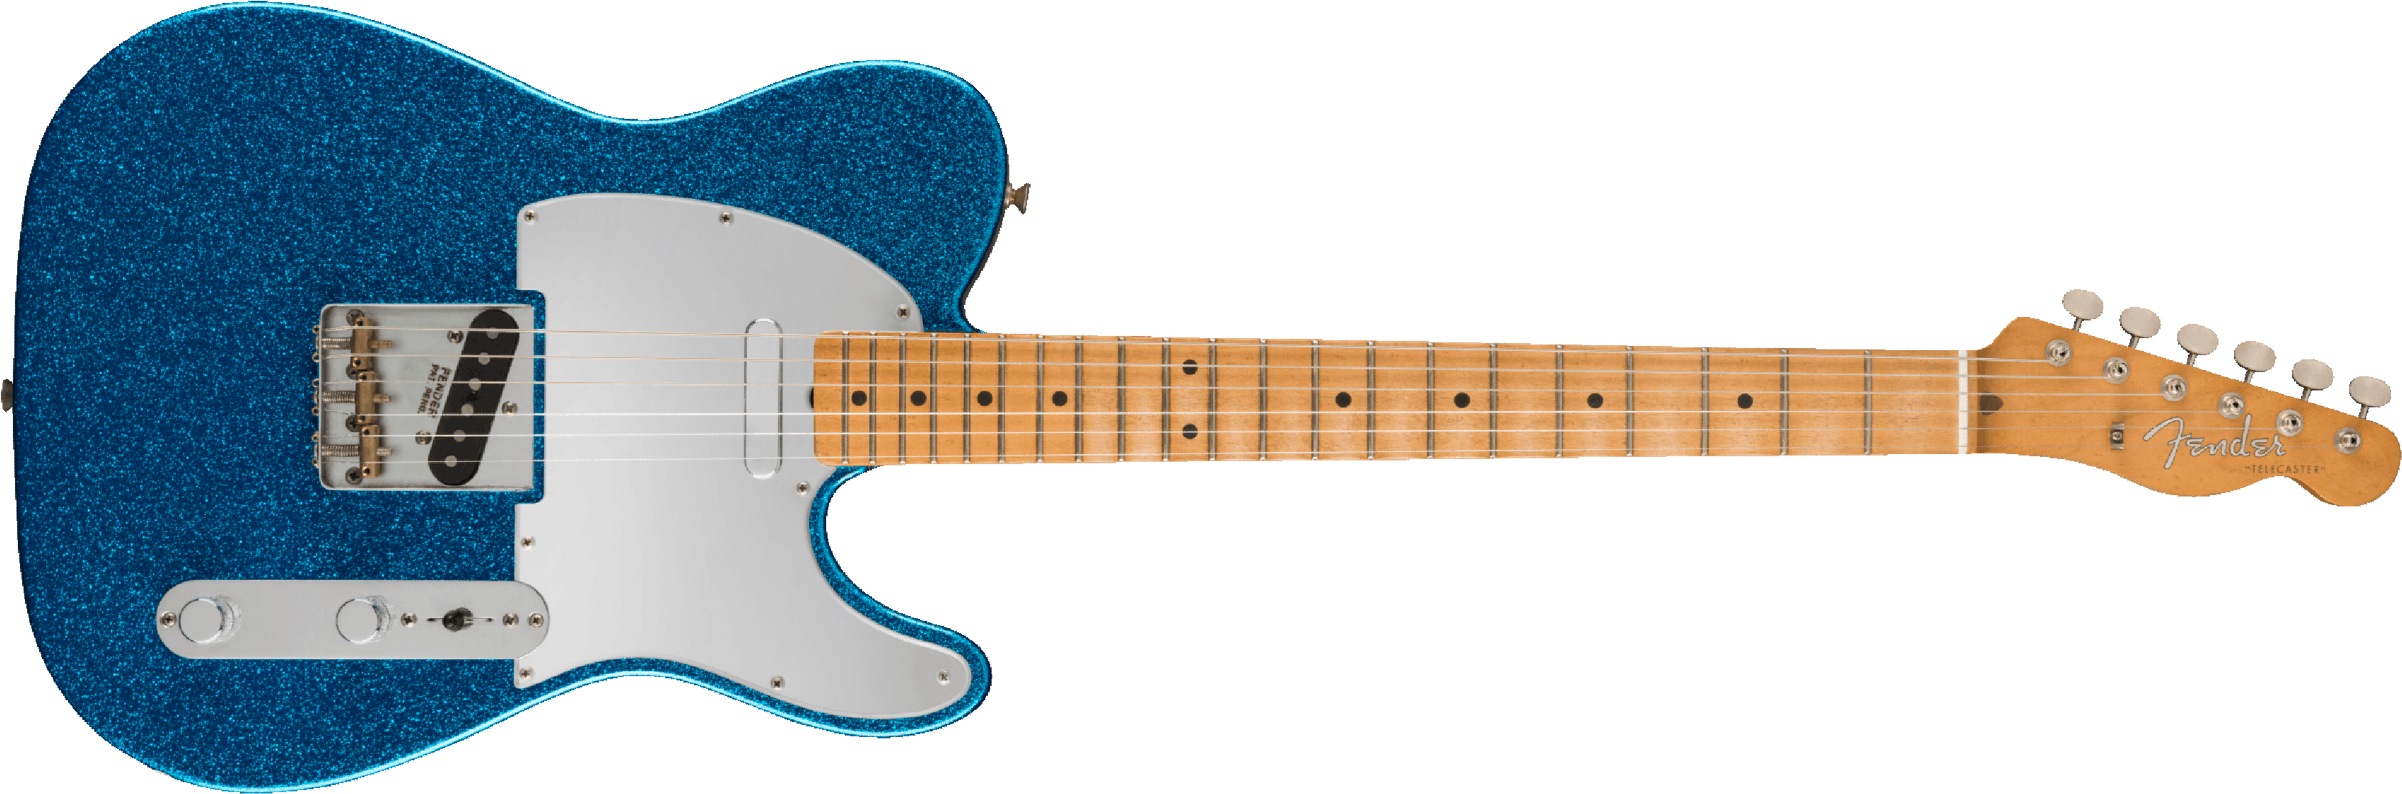 Fender Telecaster J. Mascis Signature 2s Ht Mn - Sparkle Blue - E-Gitarre in Teleform - Main picture